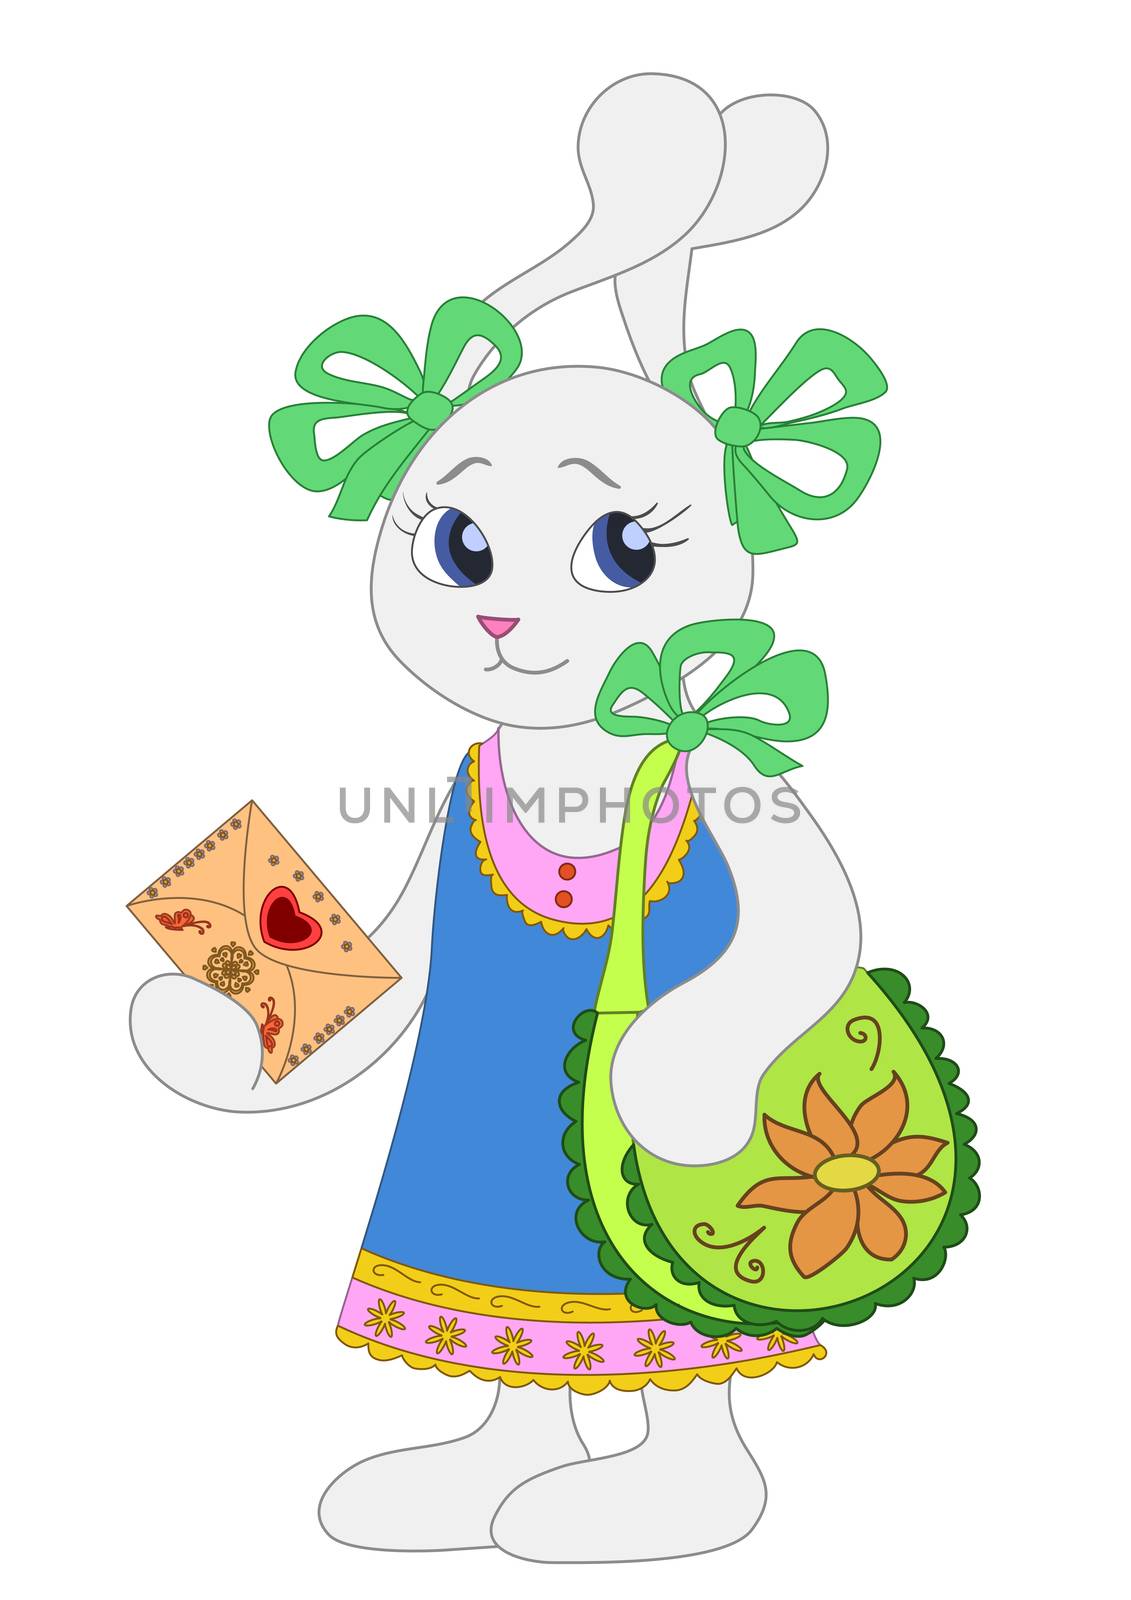 Cartoon rabbit girl with a celebratory congratulatory card.